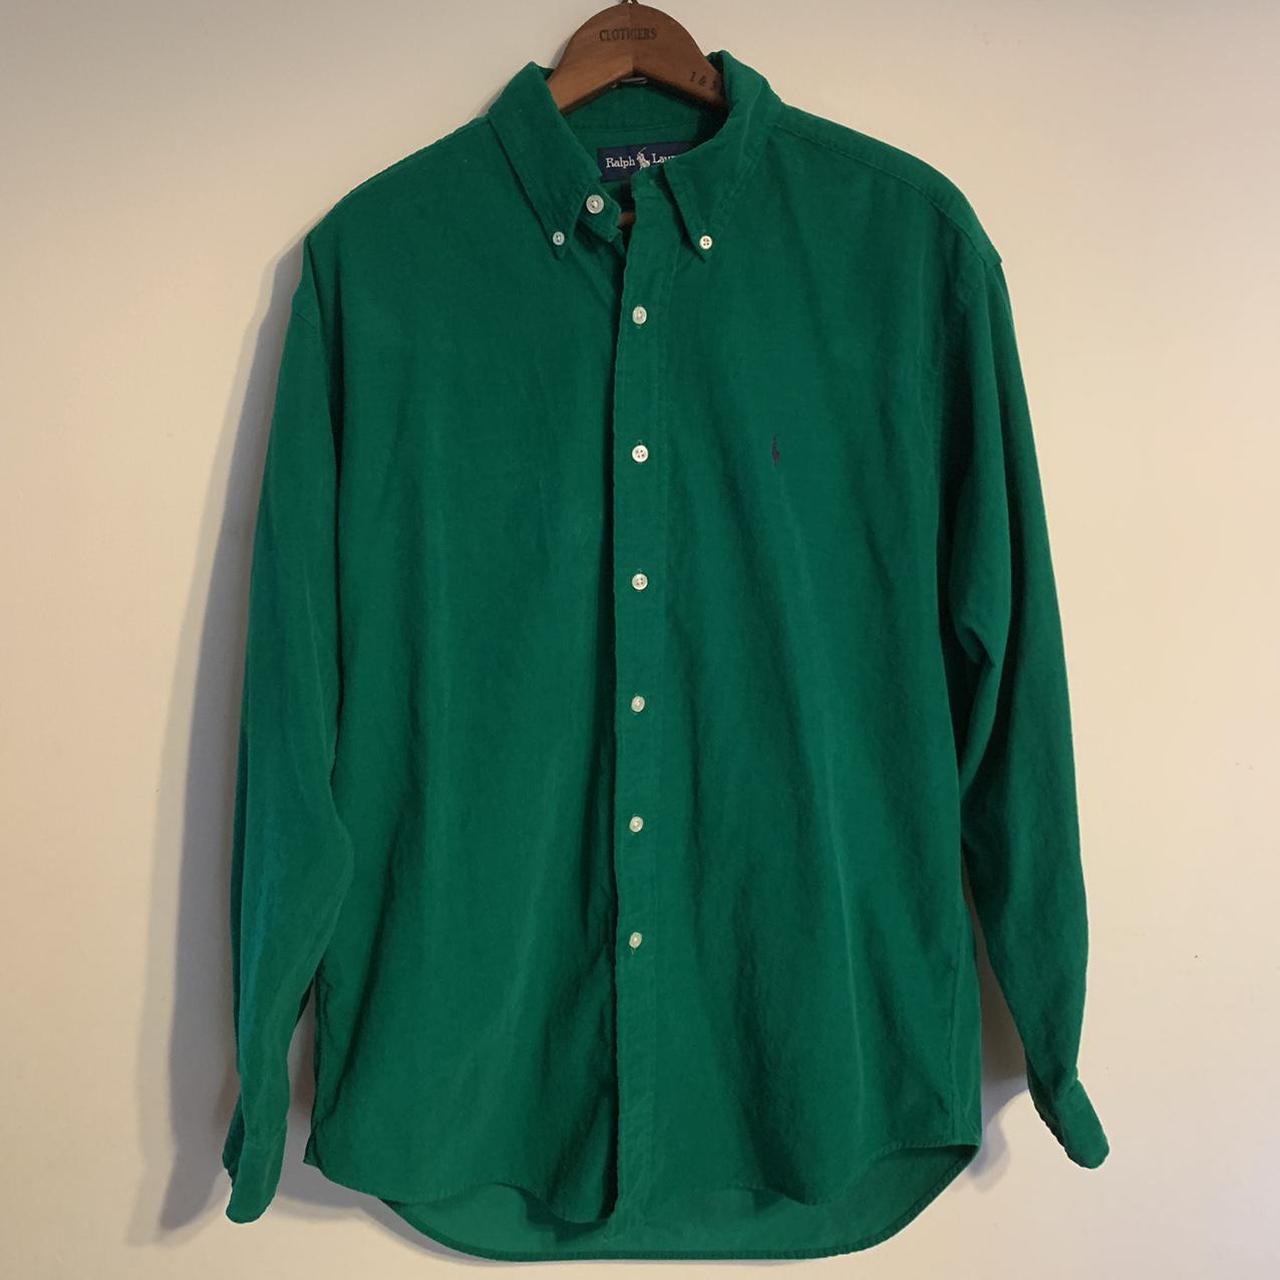 Product Image 1 - Emerald green Ralph Lauren Polo